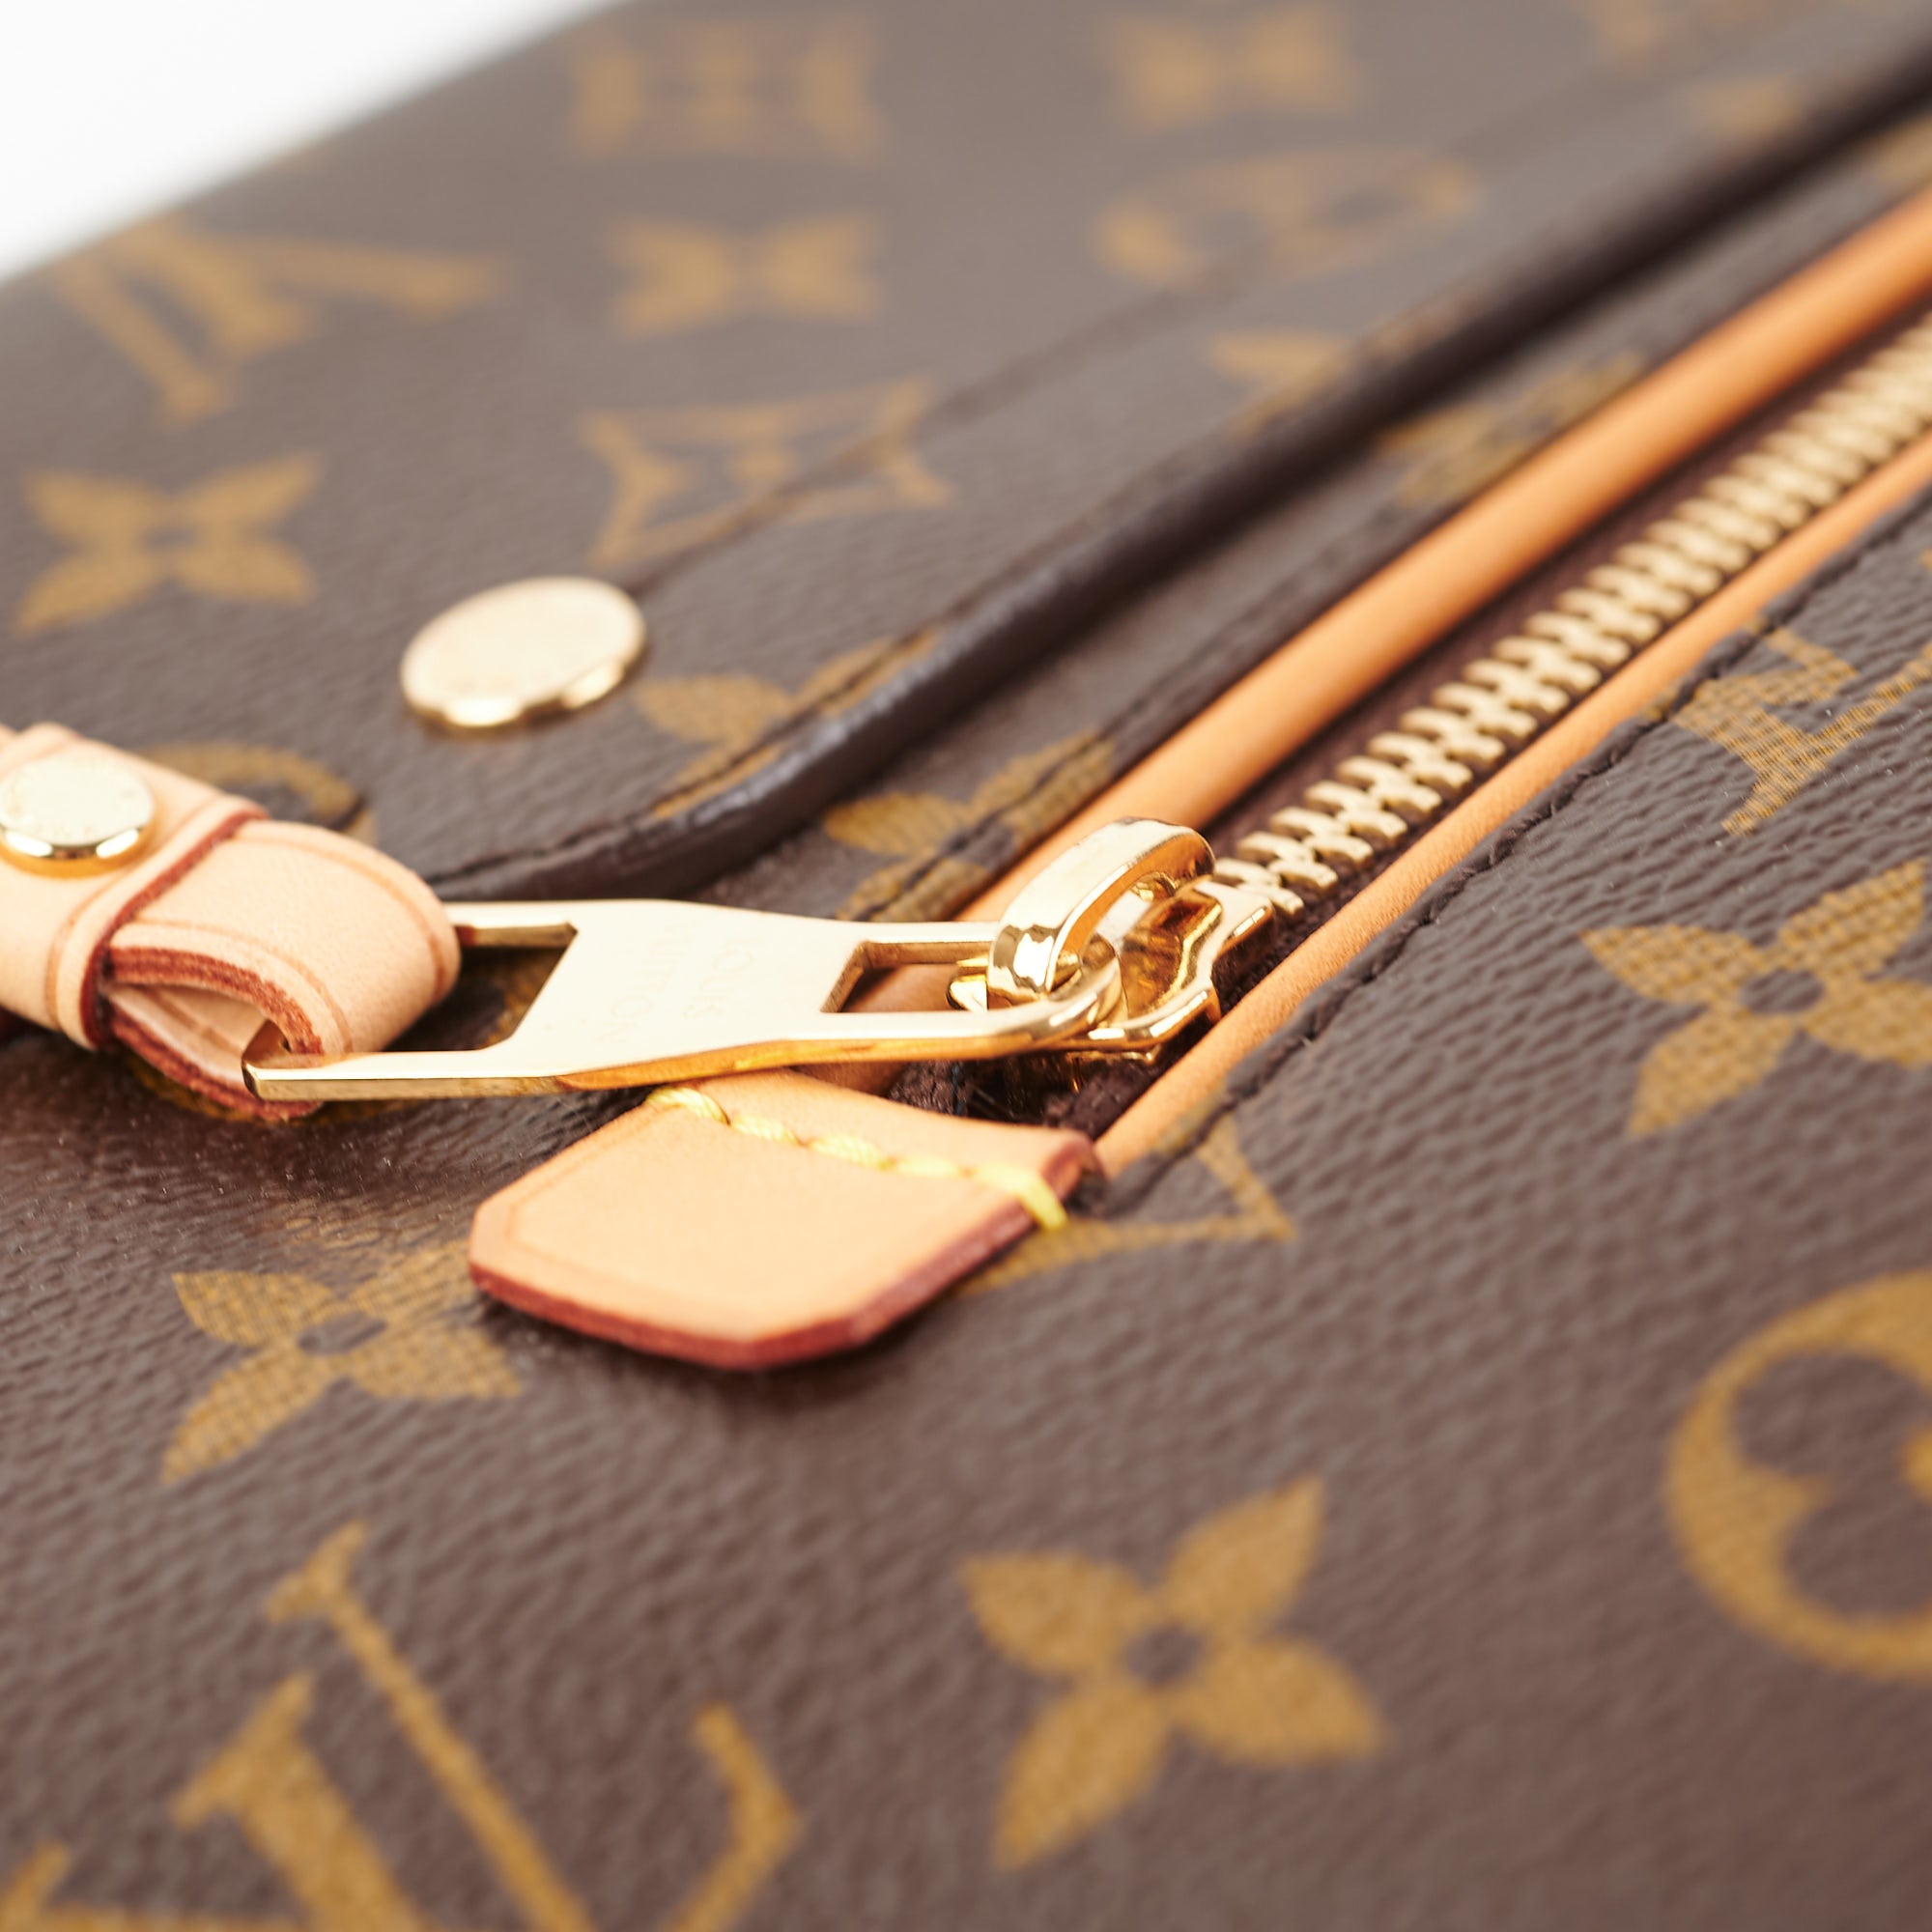 Louis Vuitton Olympe Handbag 400238